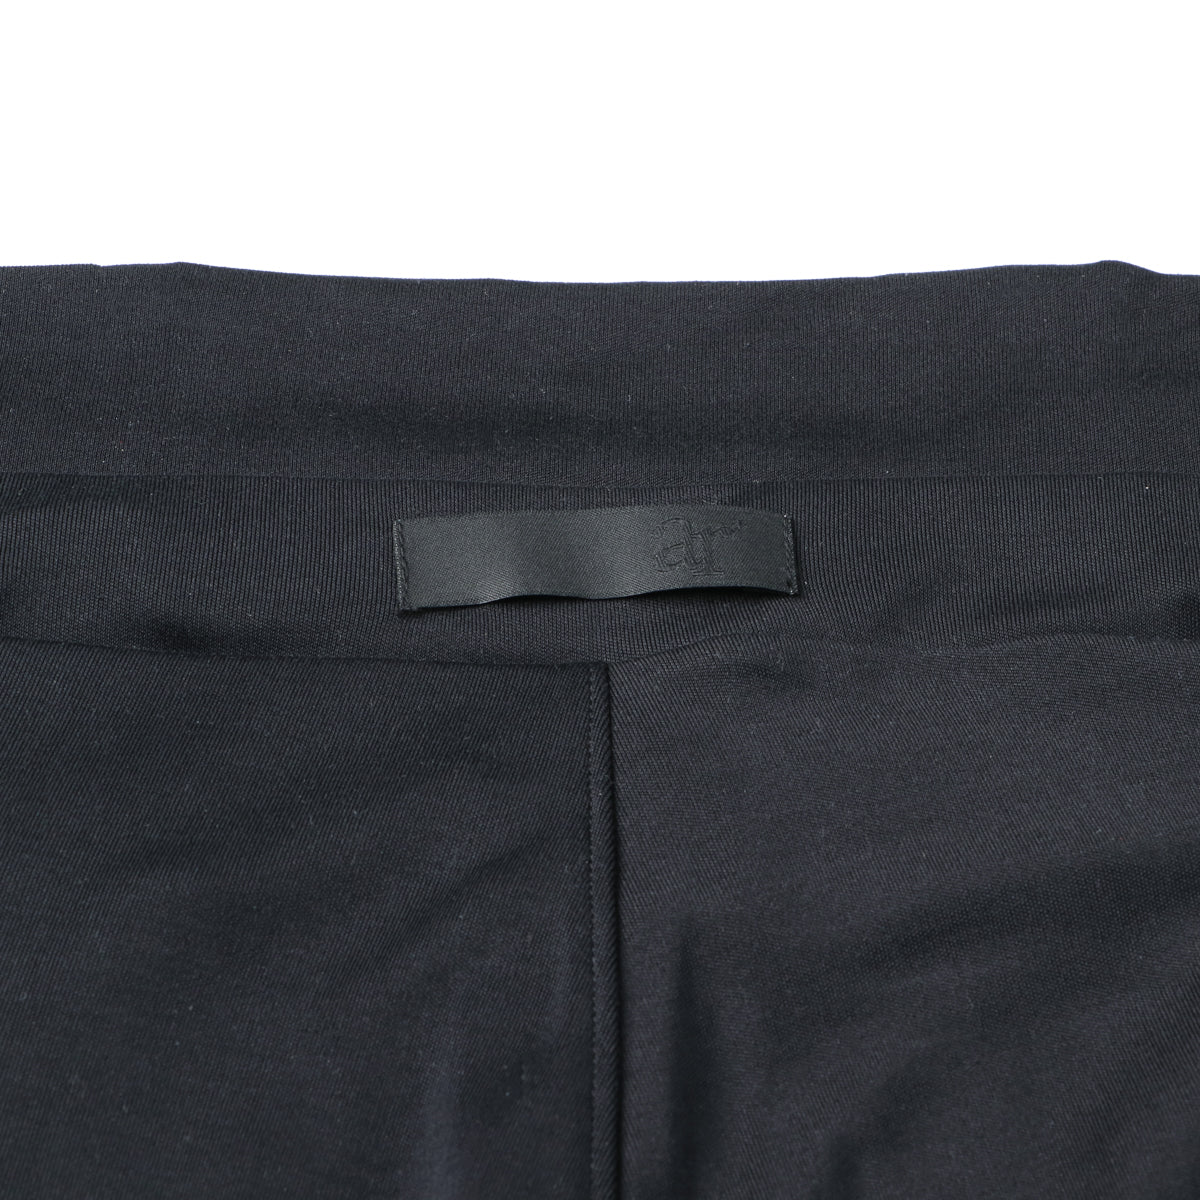 Silk Jersey Bottoms (BLACK)